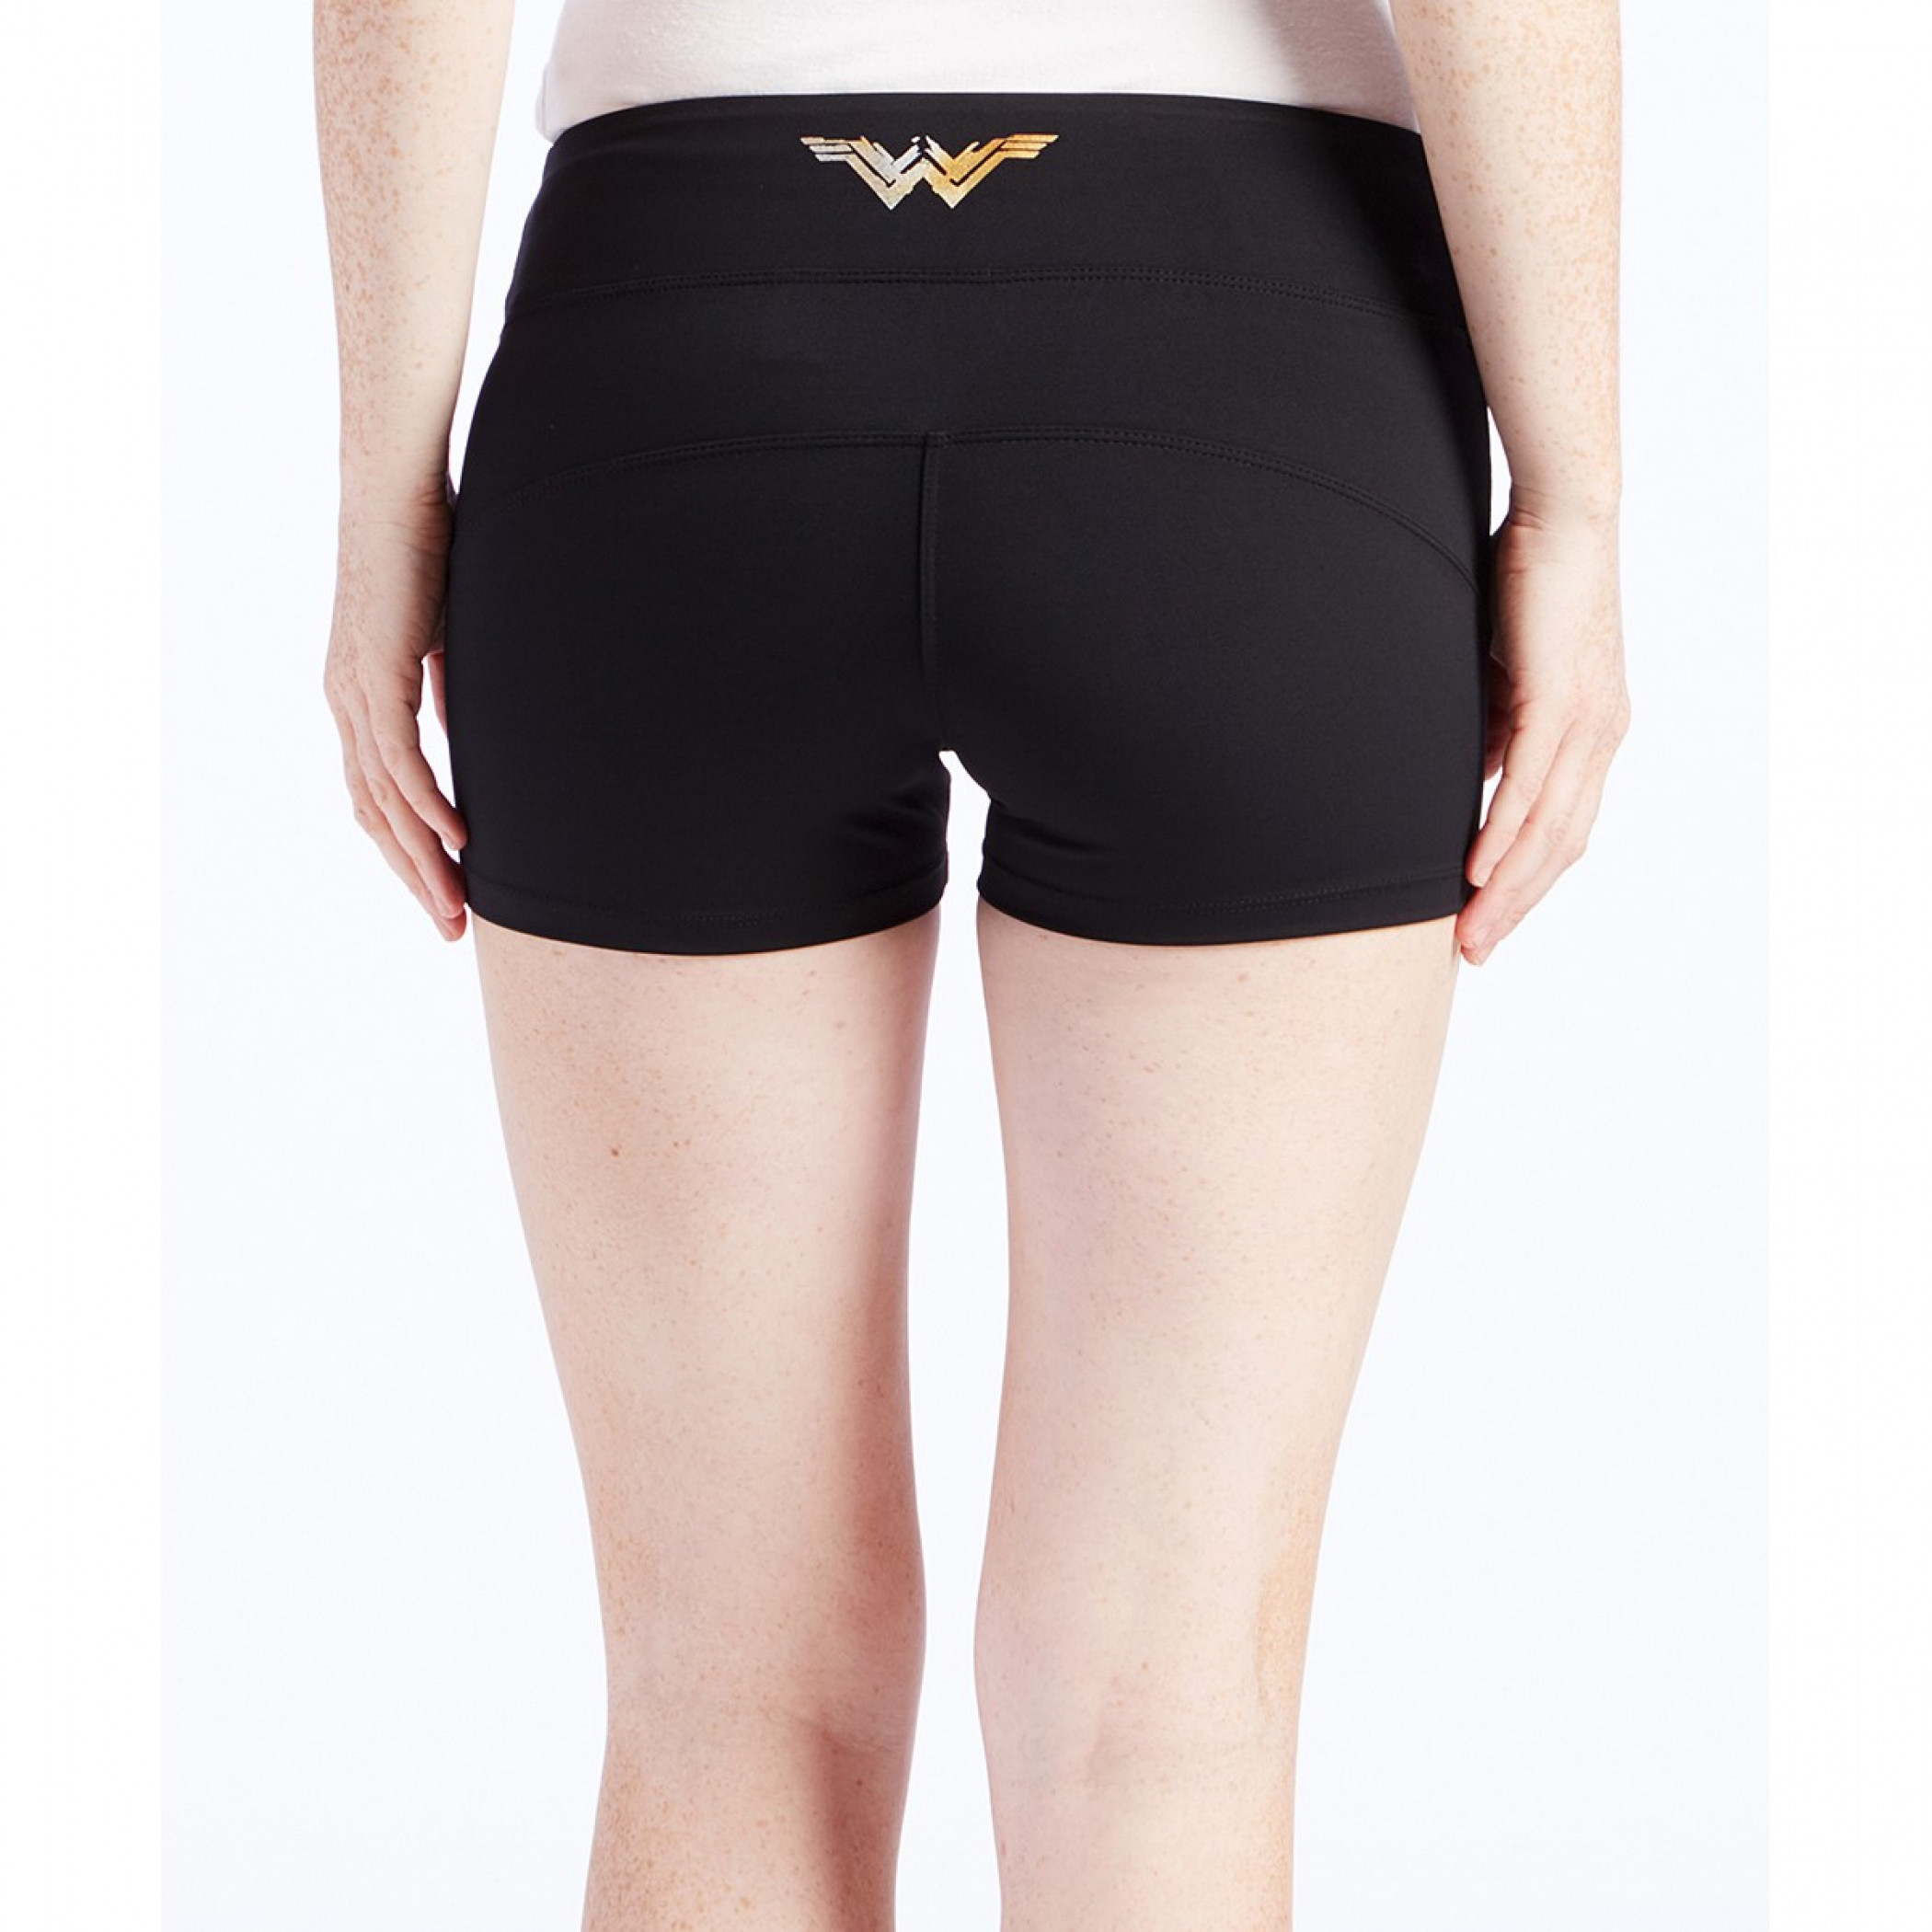 Wonder Woman Black and Gold Women's Shorts